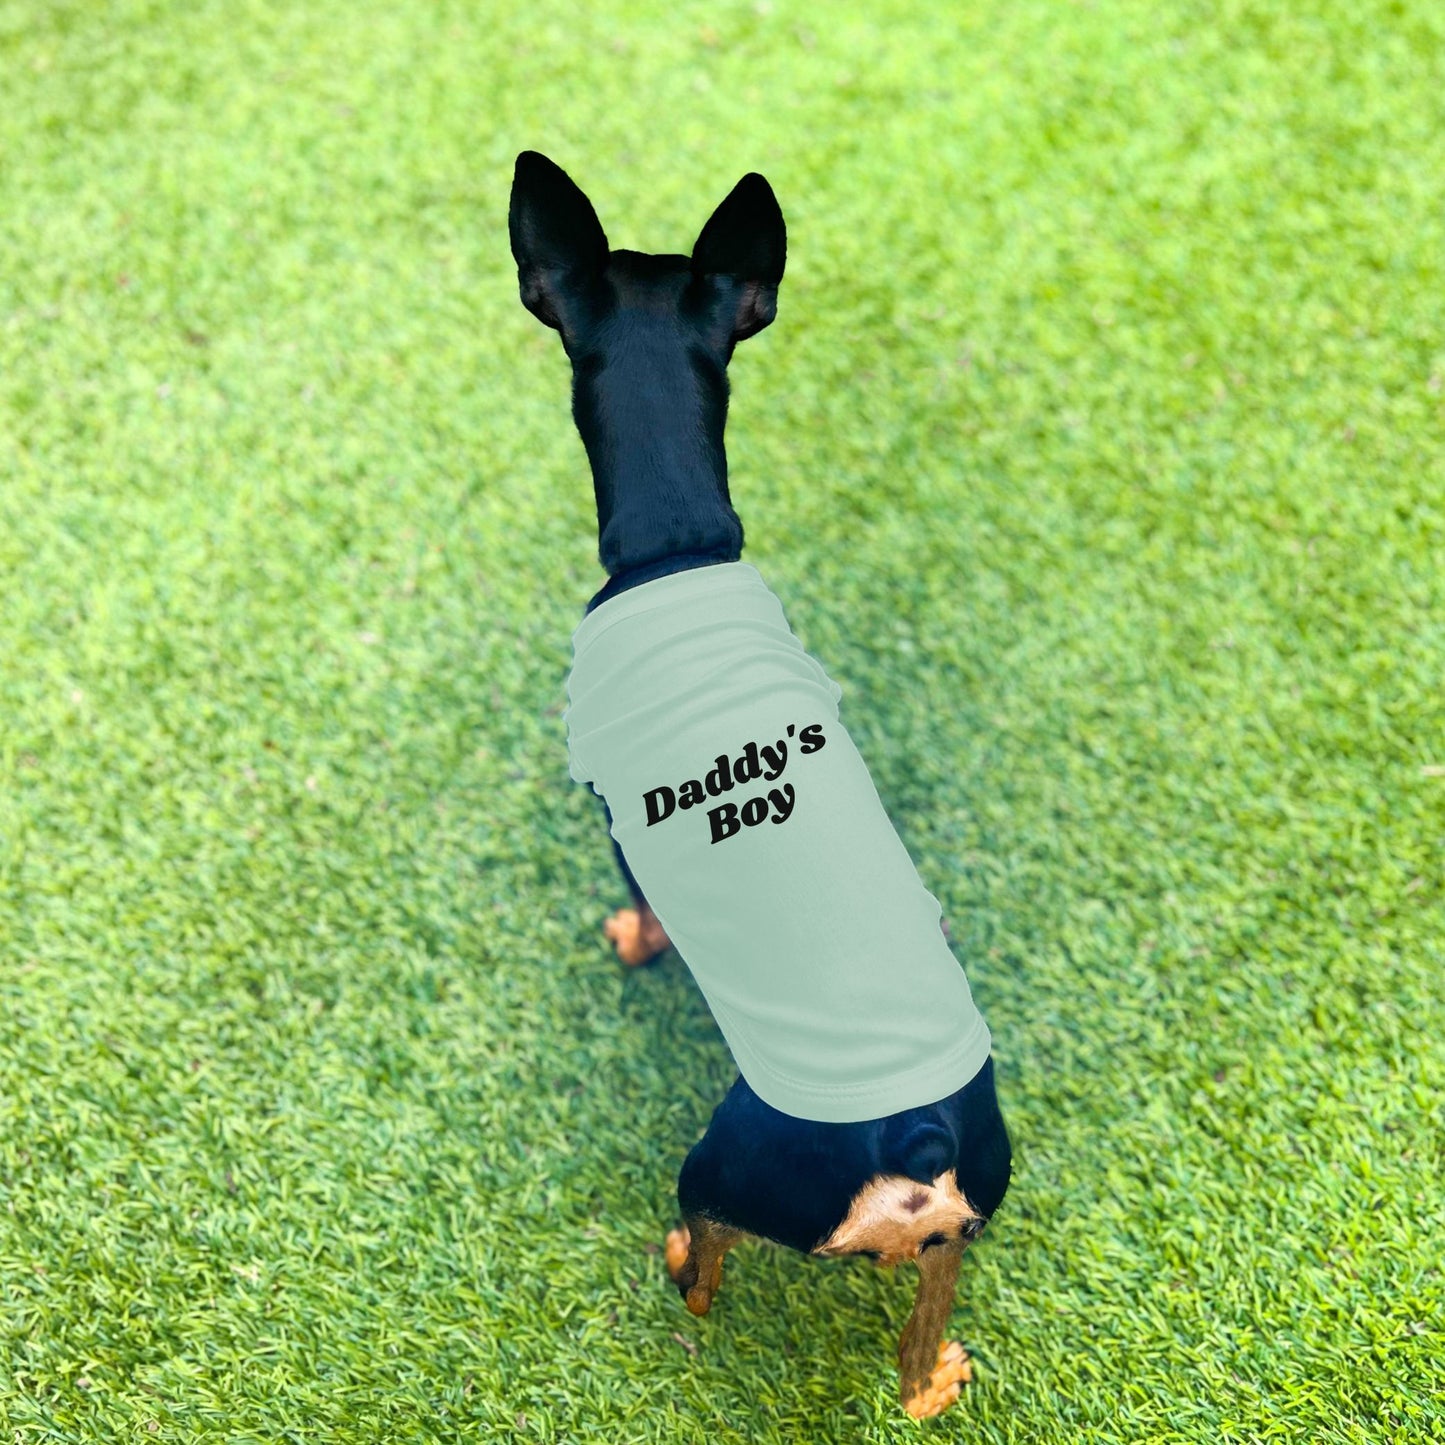 "Daddy's Boy" Dog Shirt